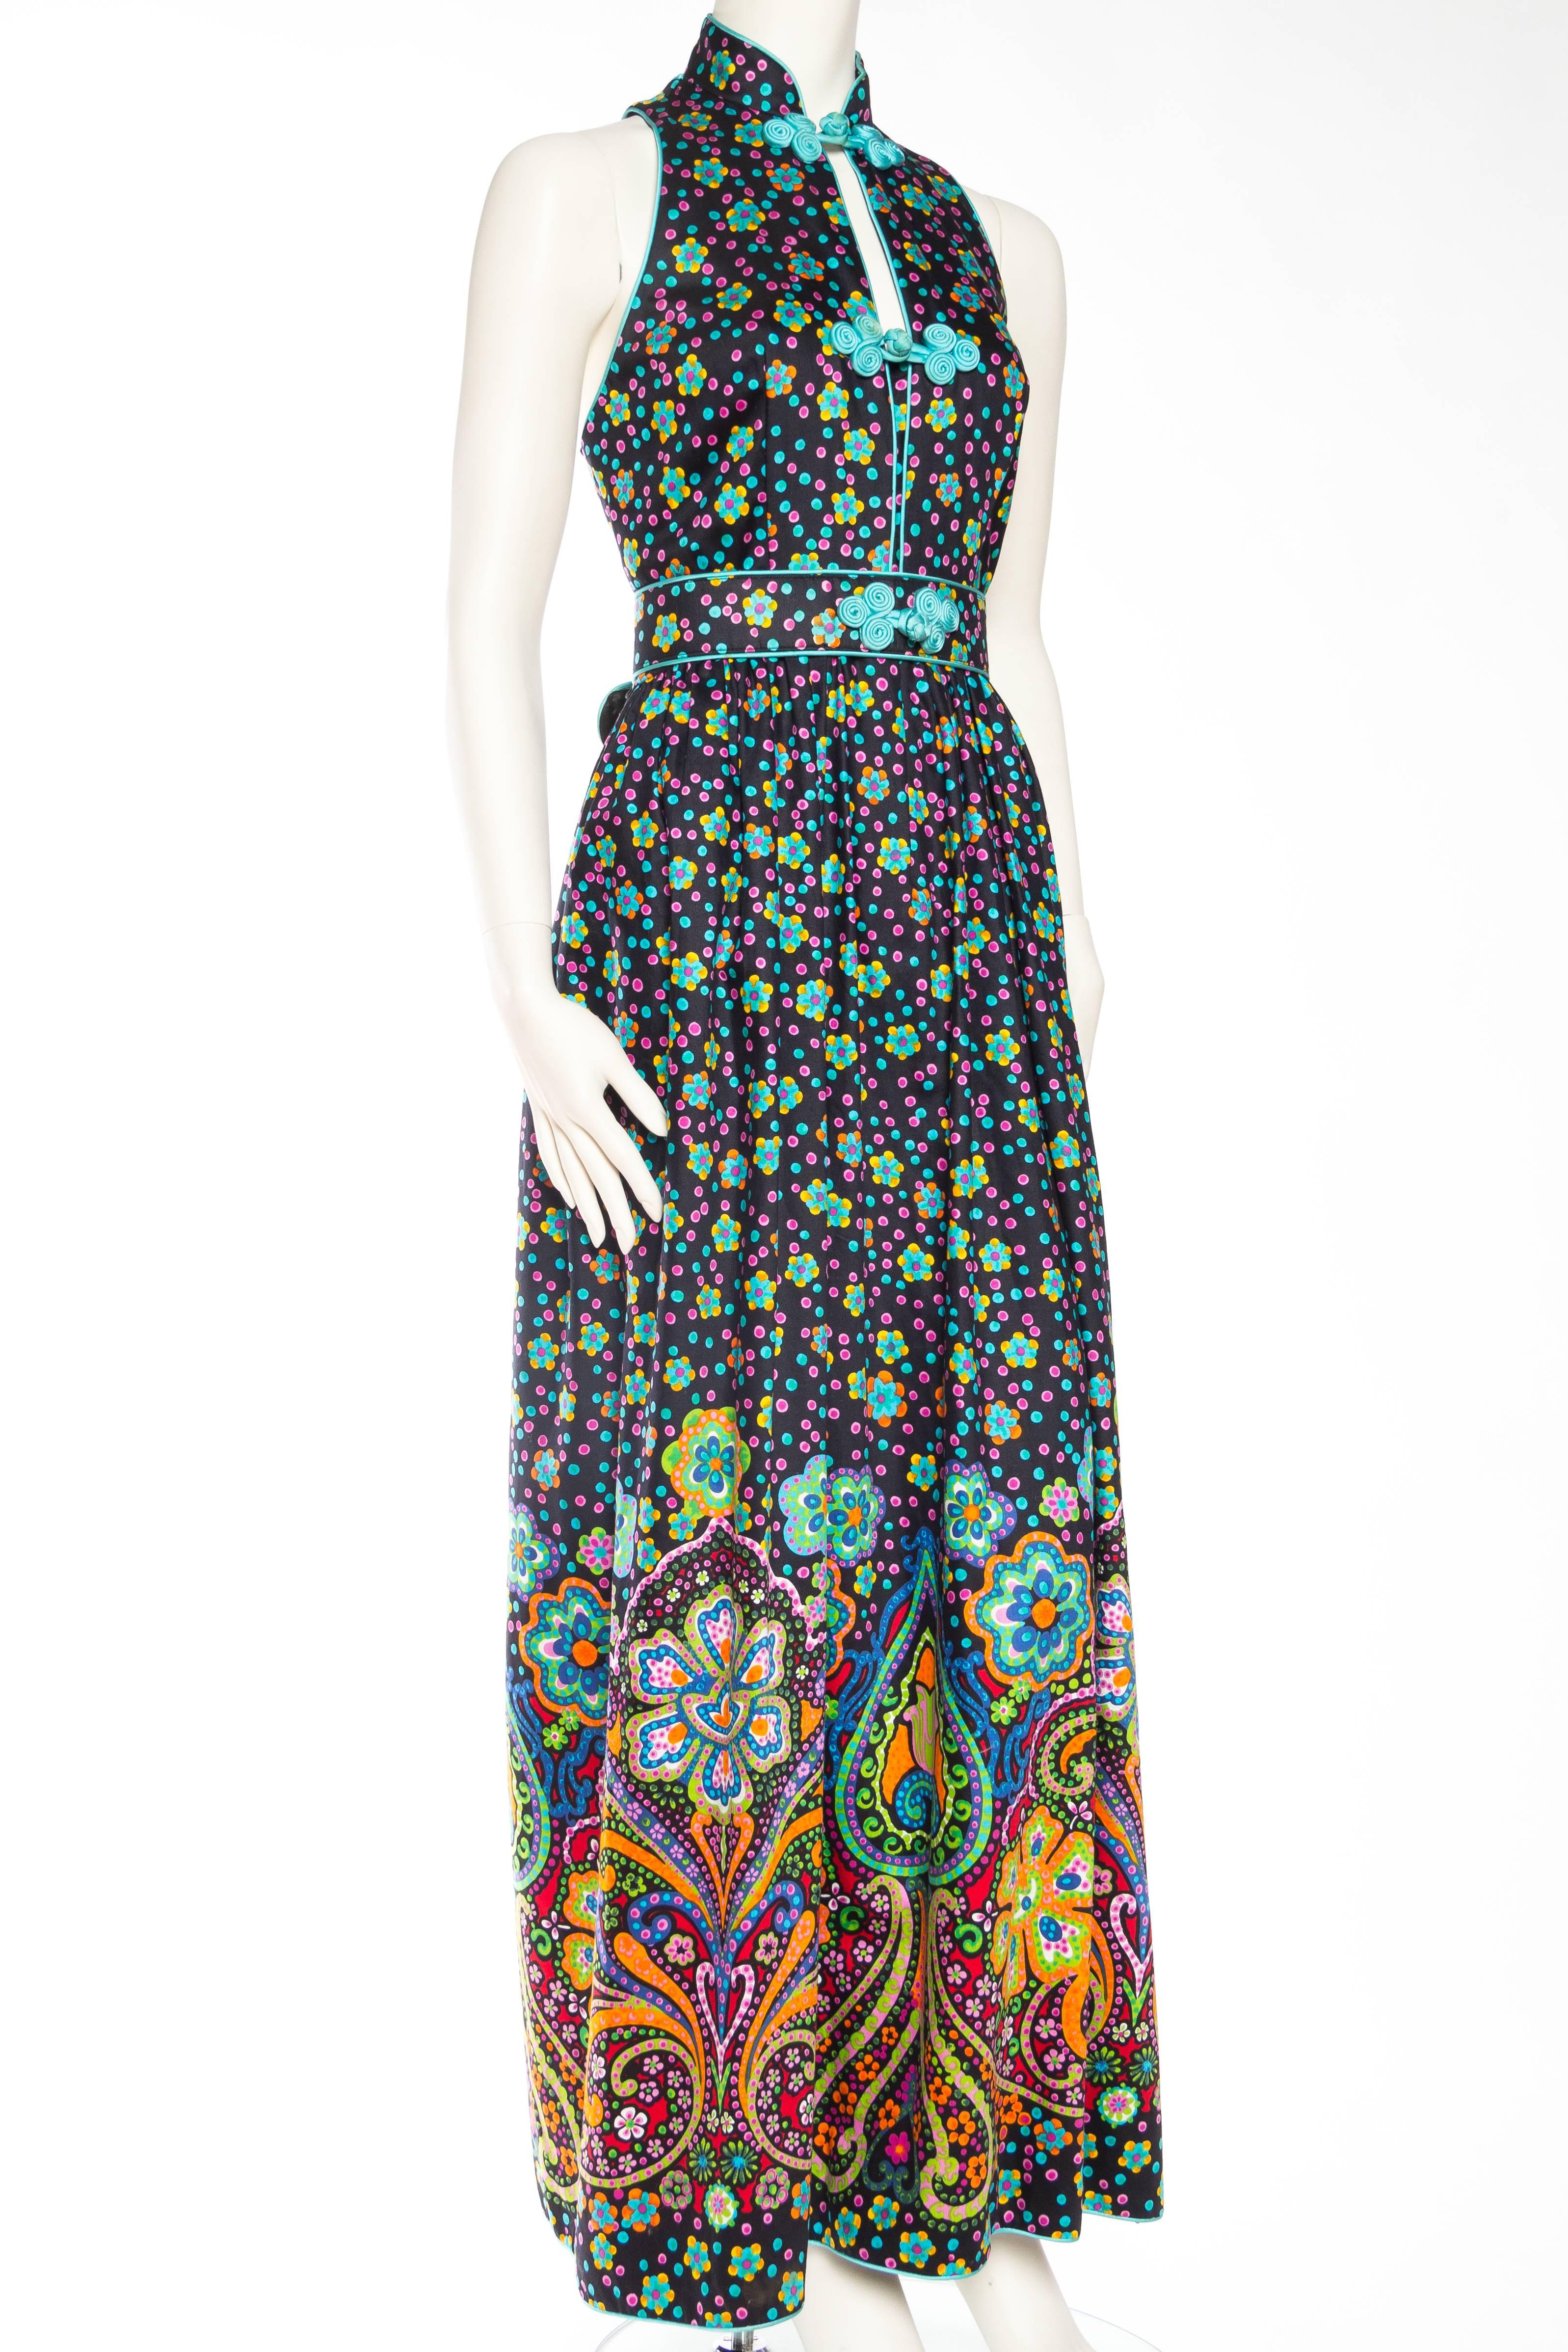 Black Rare Early 1970s Oscar De la Renta Cotton Floral Dress